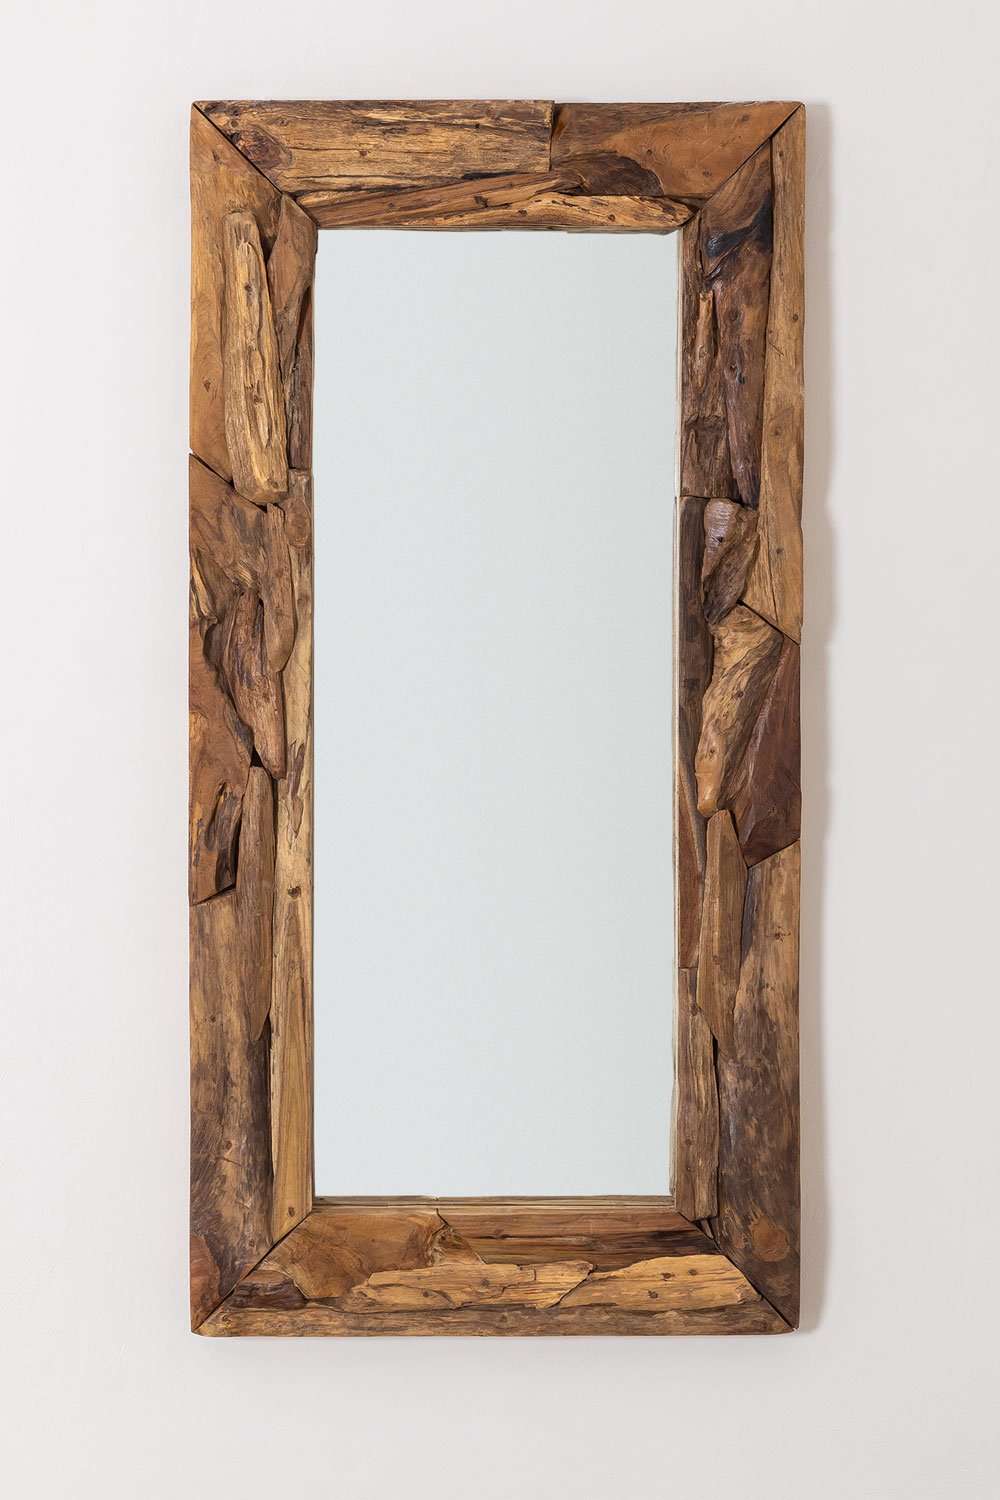 Prostokatne lustro scienne z drewna Raffa, obrazek w galerii 1